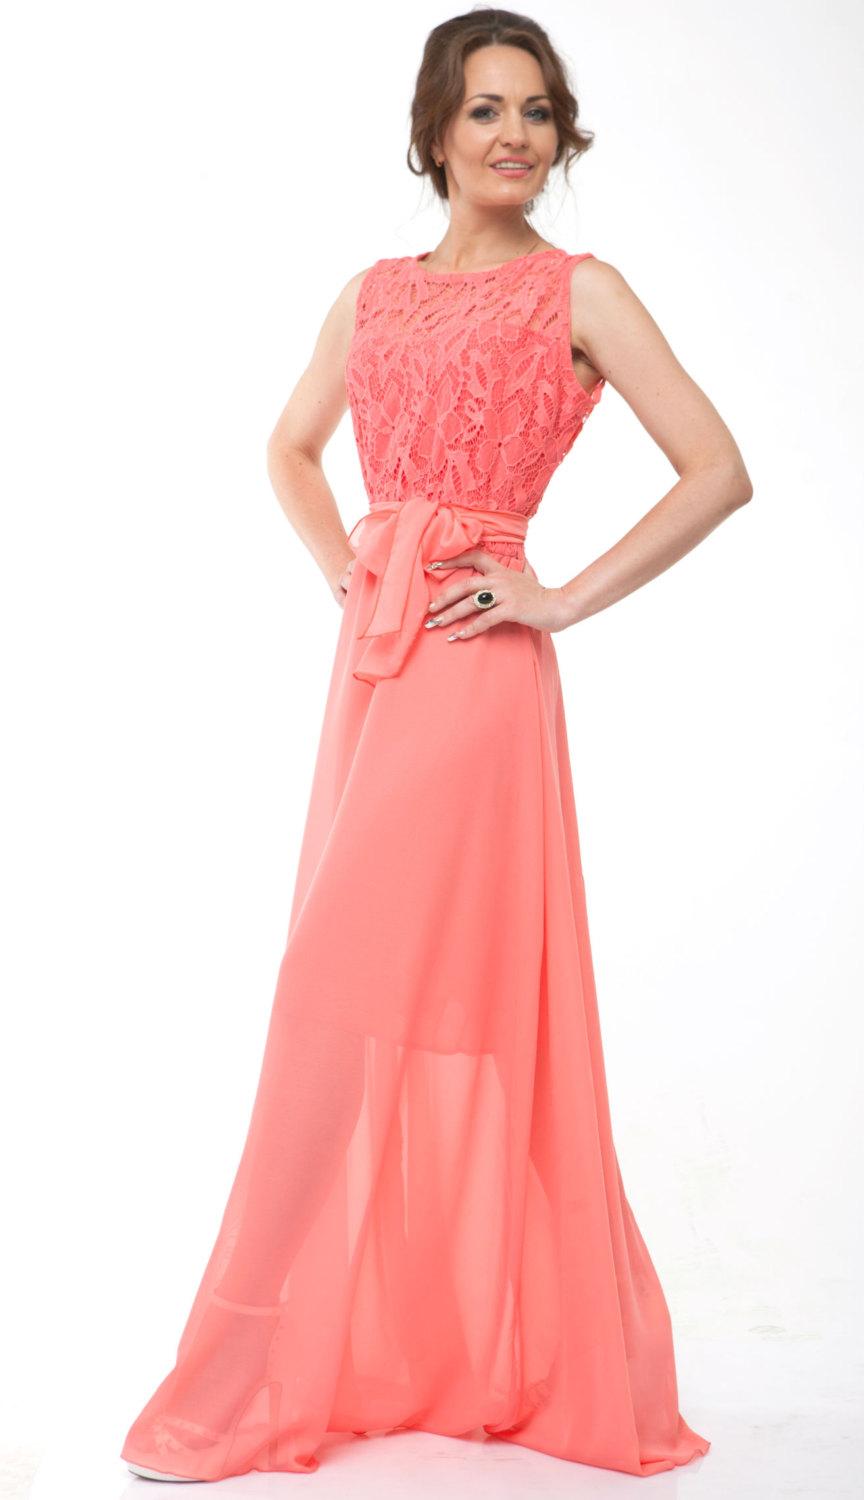 Mariage - Bridesmaid Dress Lace Chiffon Long Dress Wedding coral.